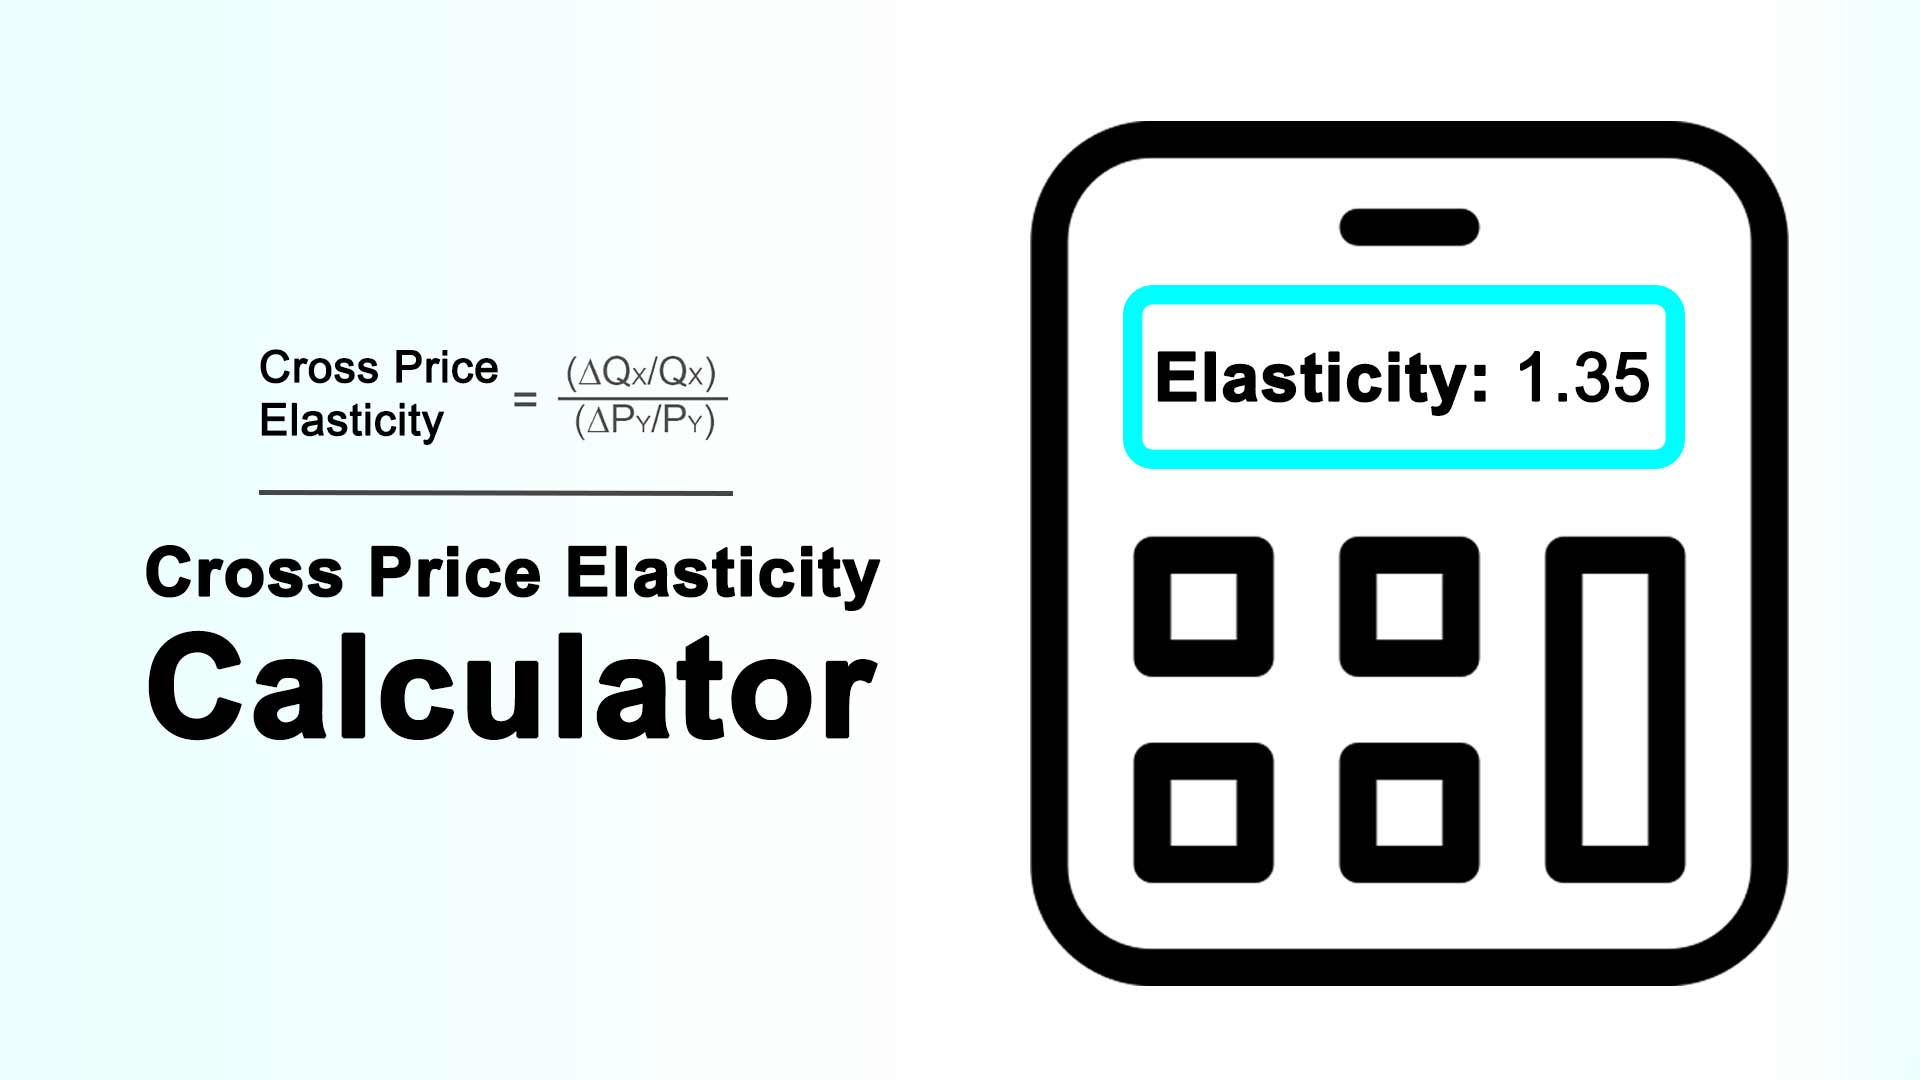 Cross Price Elasticity Calculator